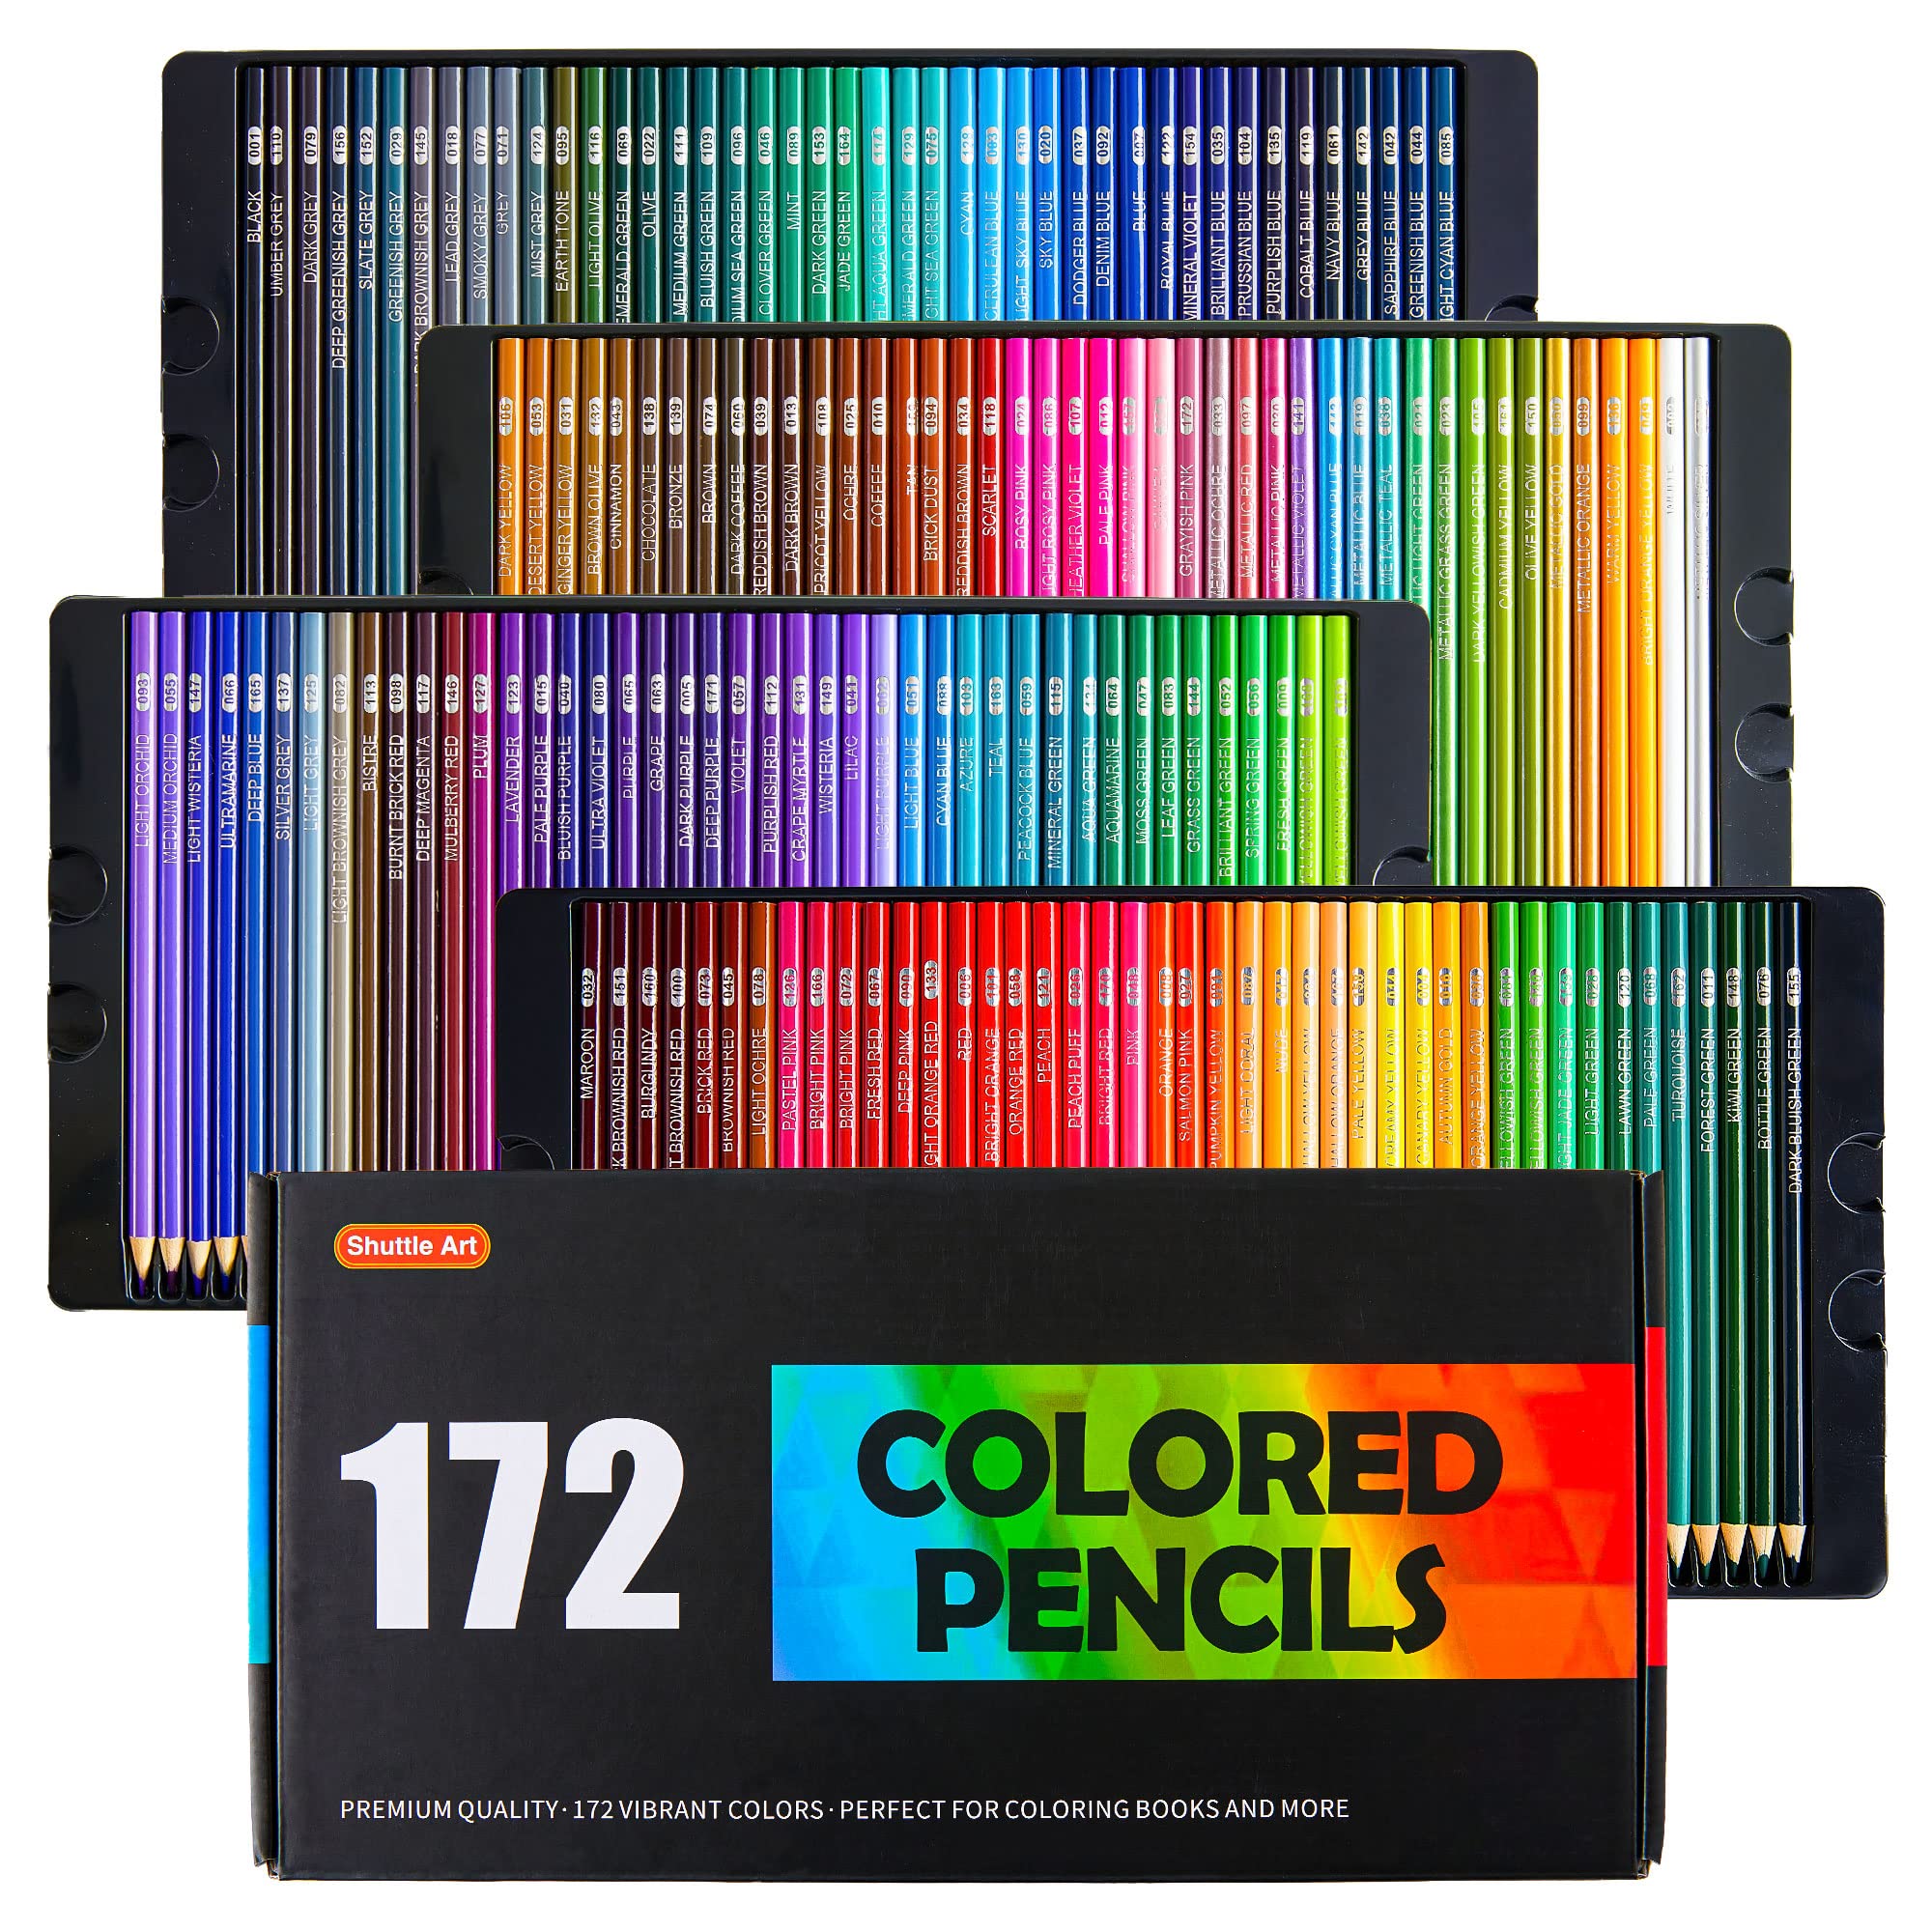 Shuttle Art 172 Colored Pencils